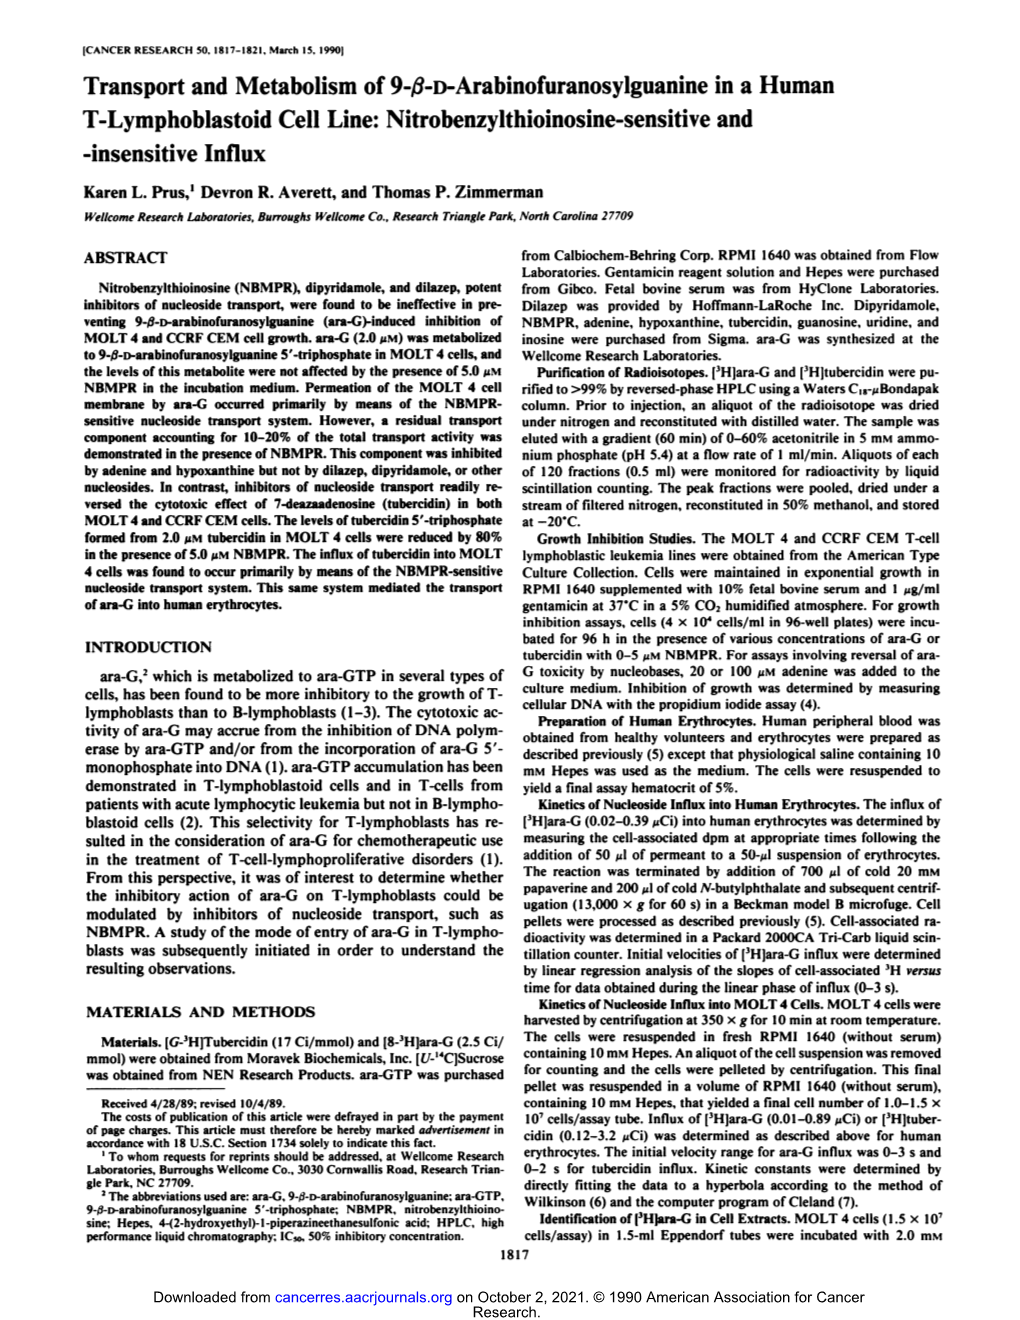 Nitrobenzylthioinosine-Sensitive and -Insensitive Influx Karen L